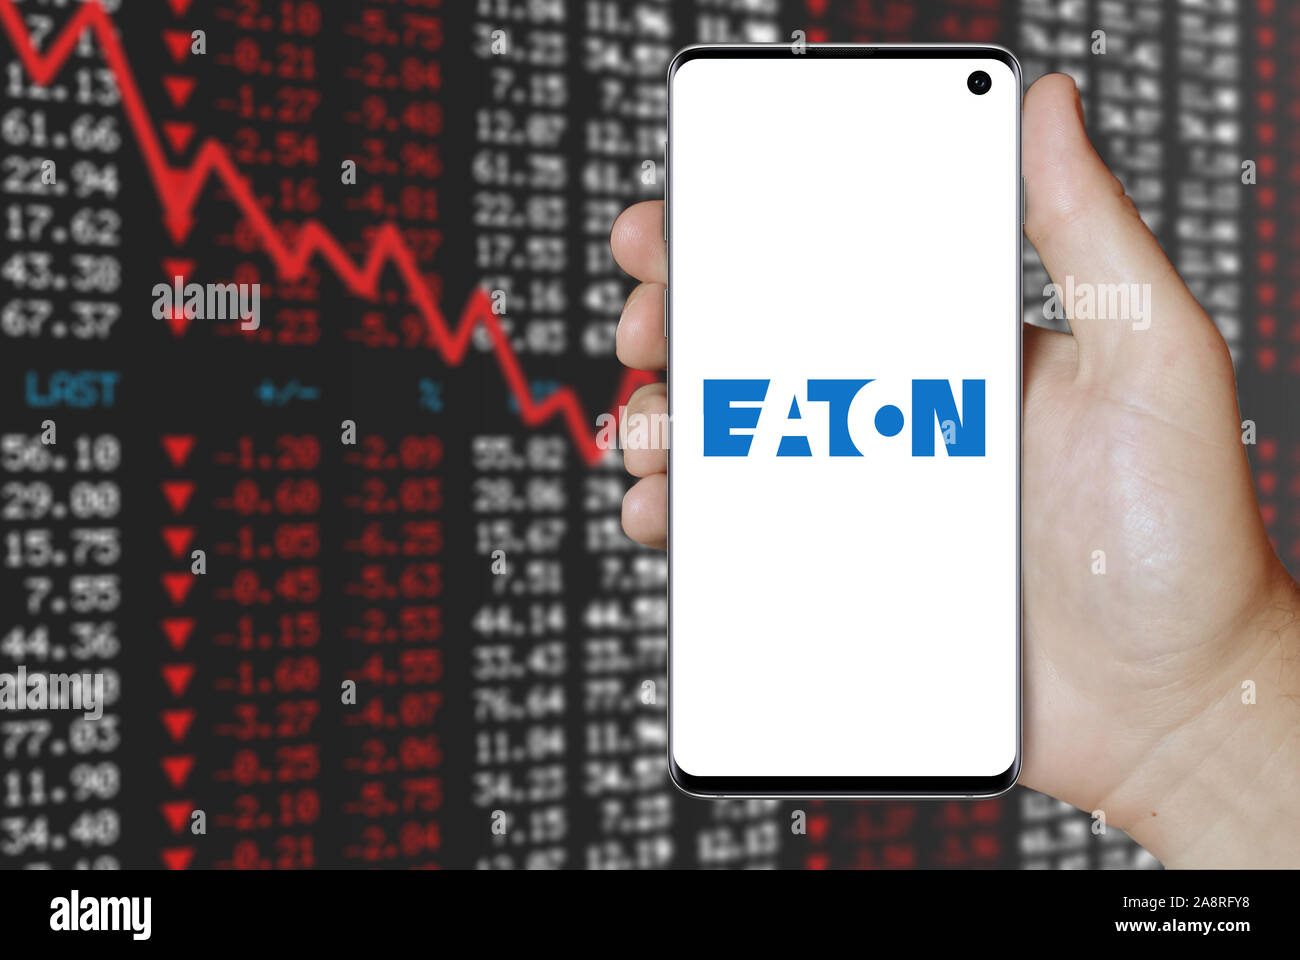 Logo of public company Eaton Corporation displayed on a smartphone. Negative stock market background. Credit: PIXDUCE Stock Photo